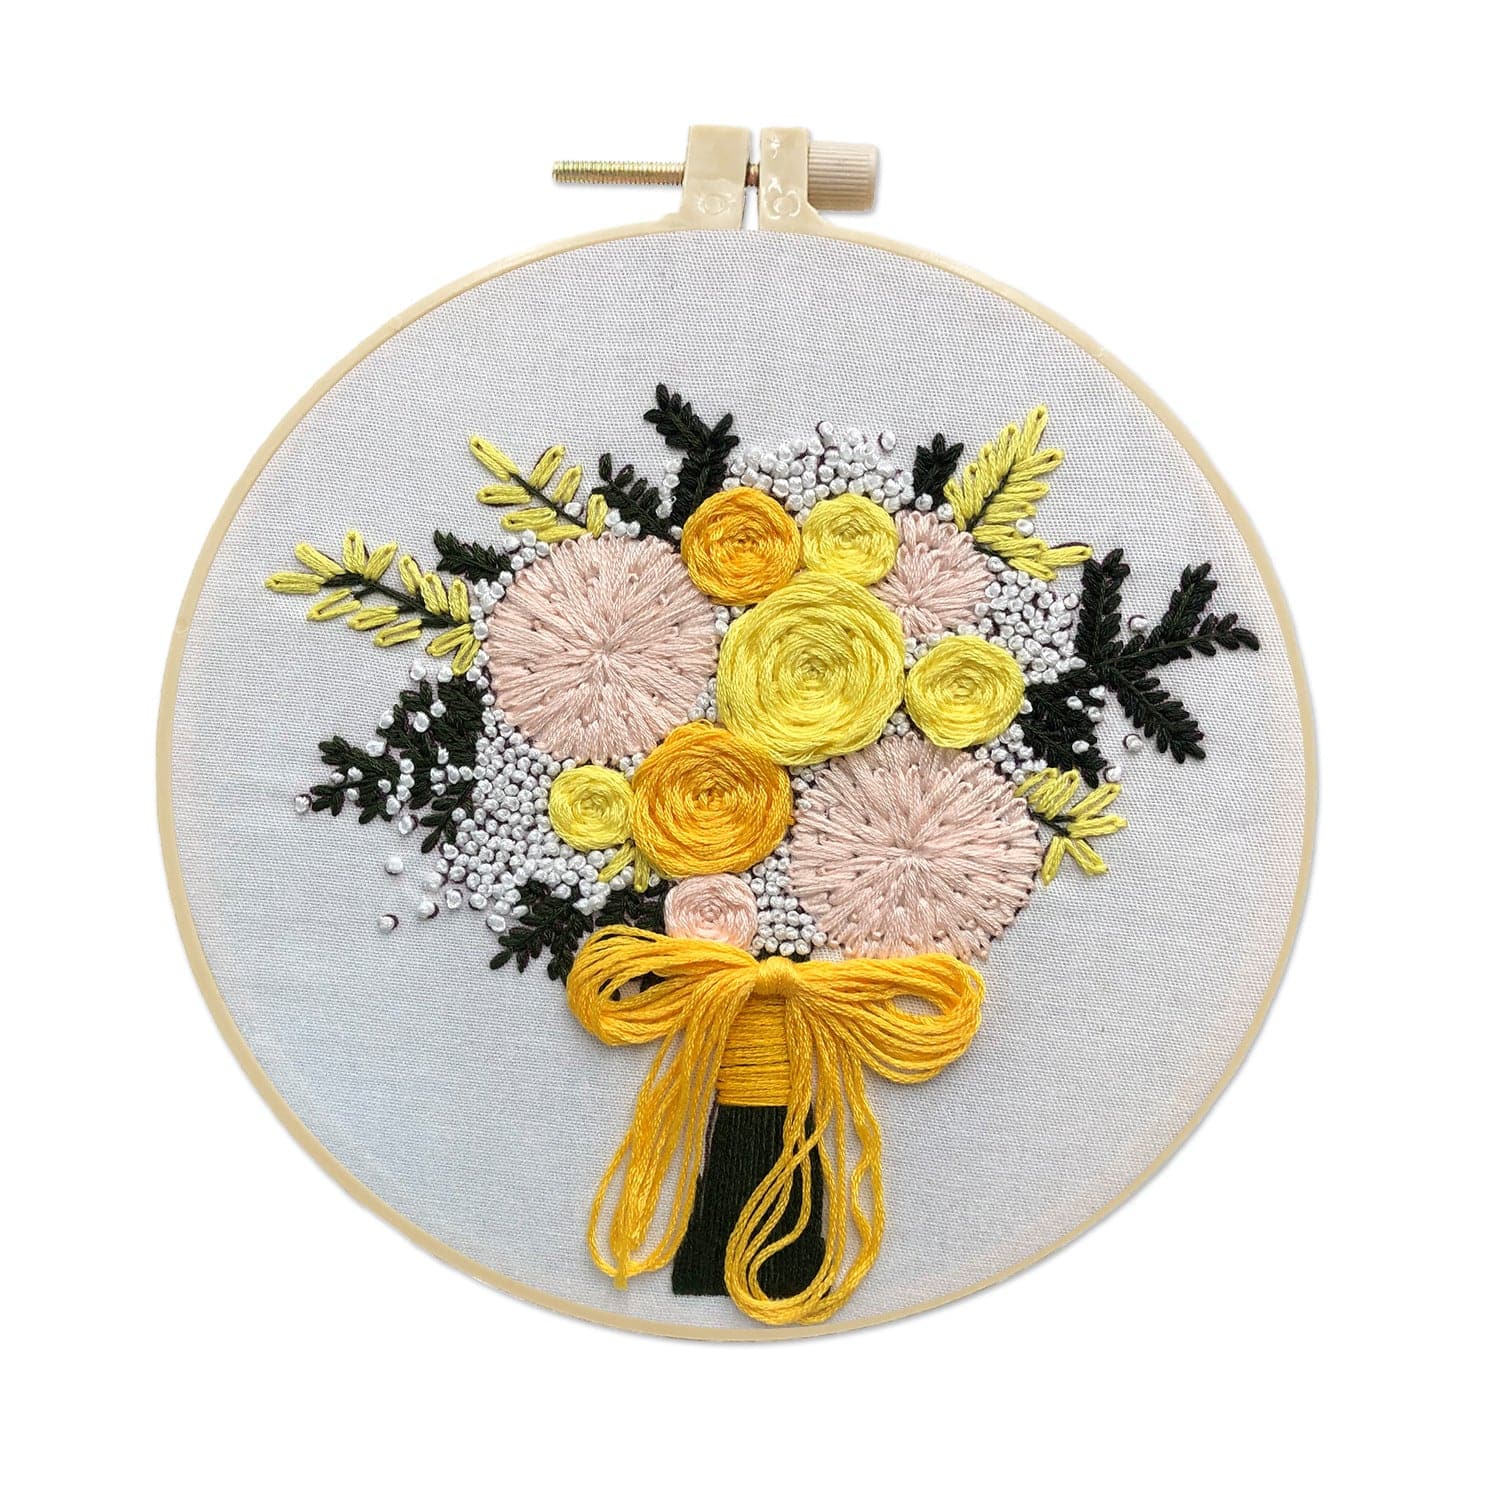 Follower-embroidery ktclubs.com